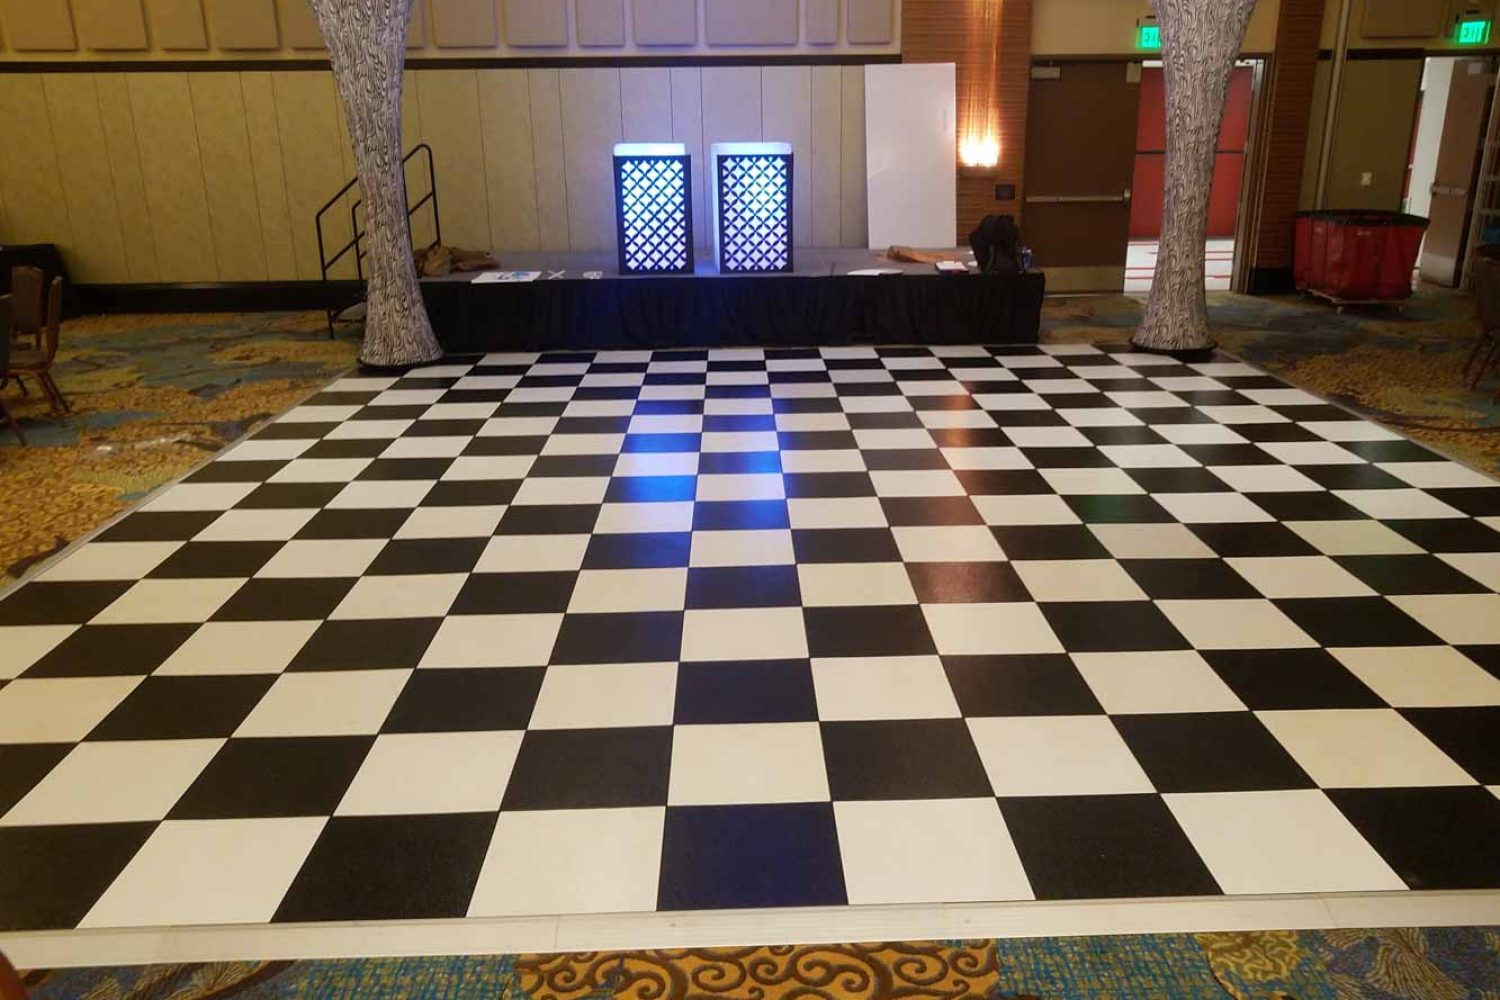 Black and White Dance Floor Rental (Checkerboard)